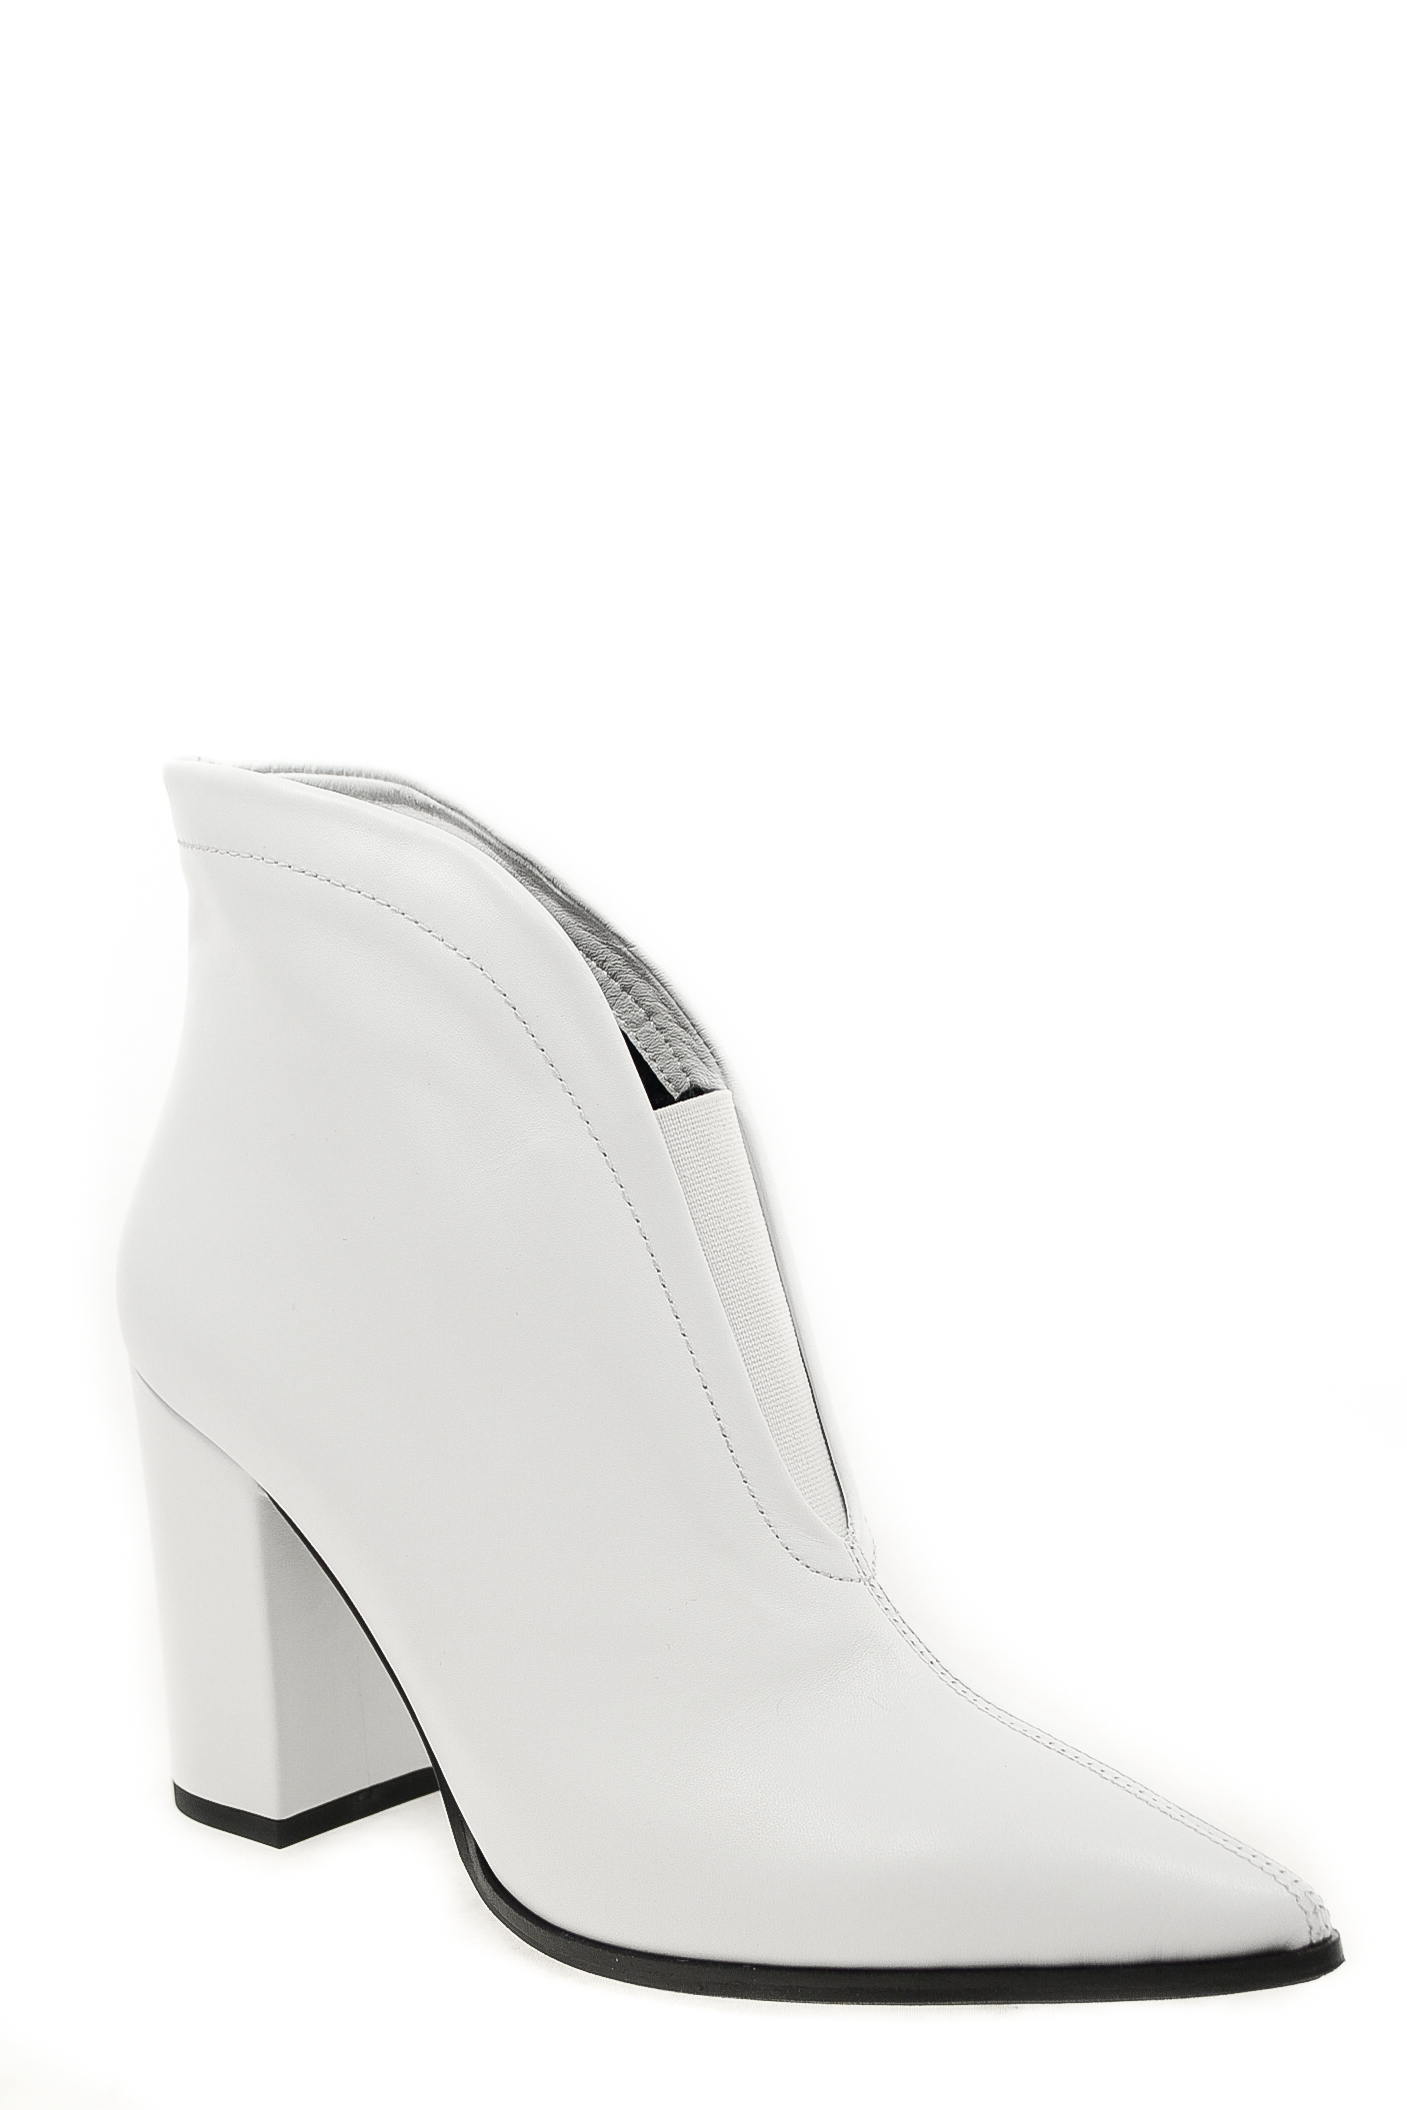 Ботинки натуральная кожа OM Magza 9053 white цвет белый.